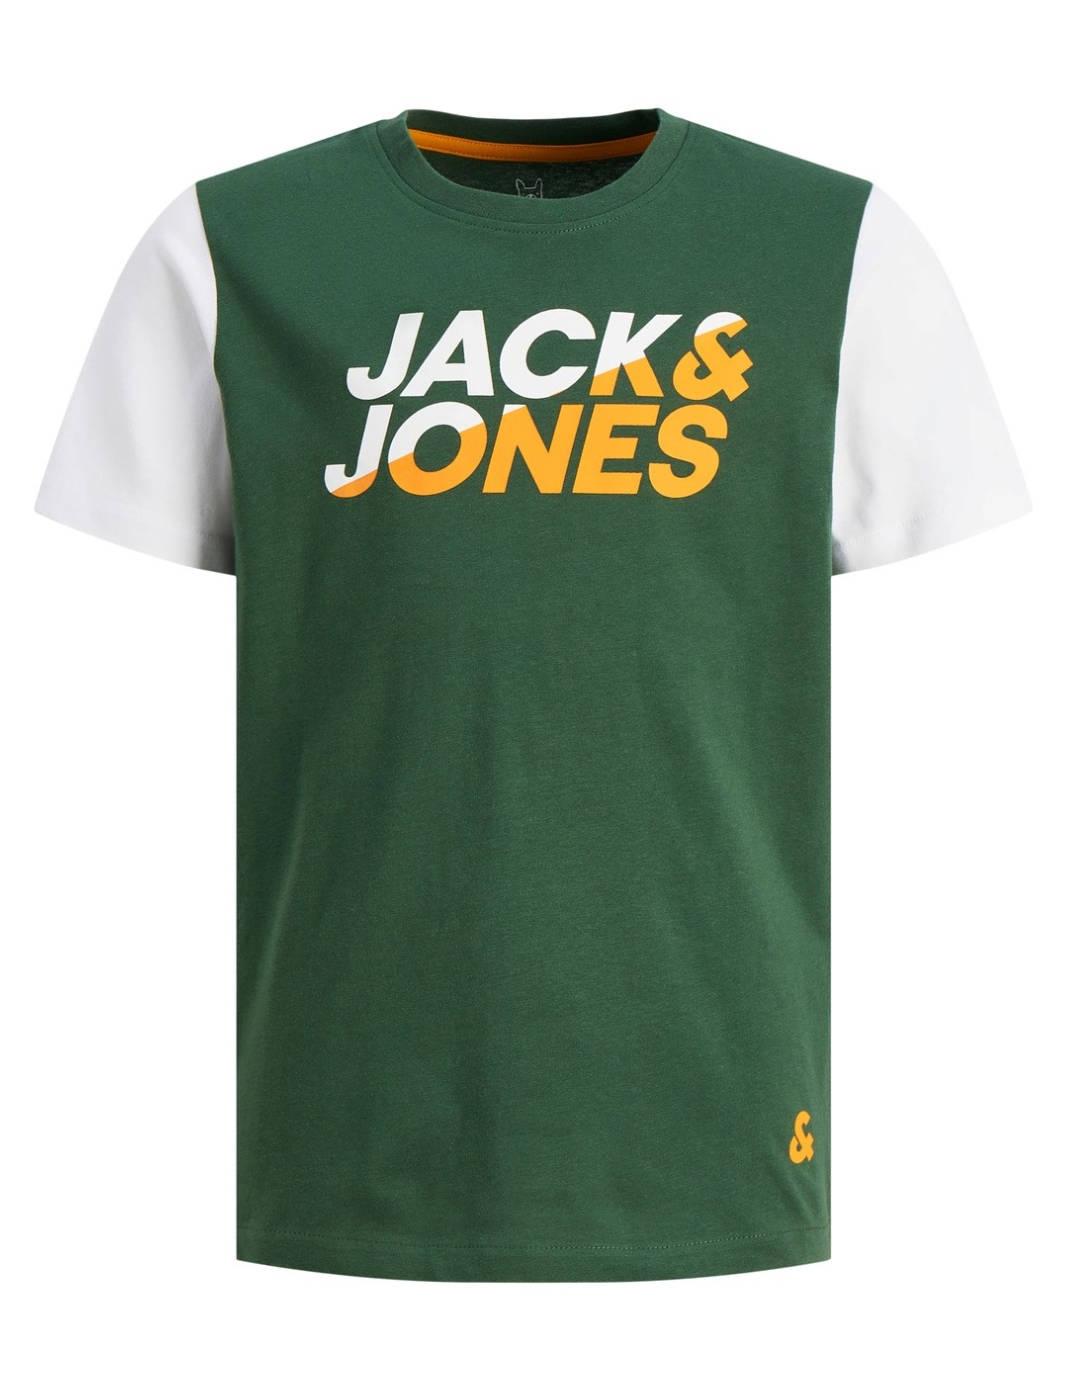 Camiseta Jack&Jones Junior verde manga corta para niño